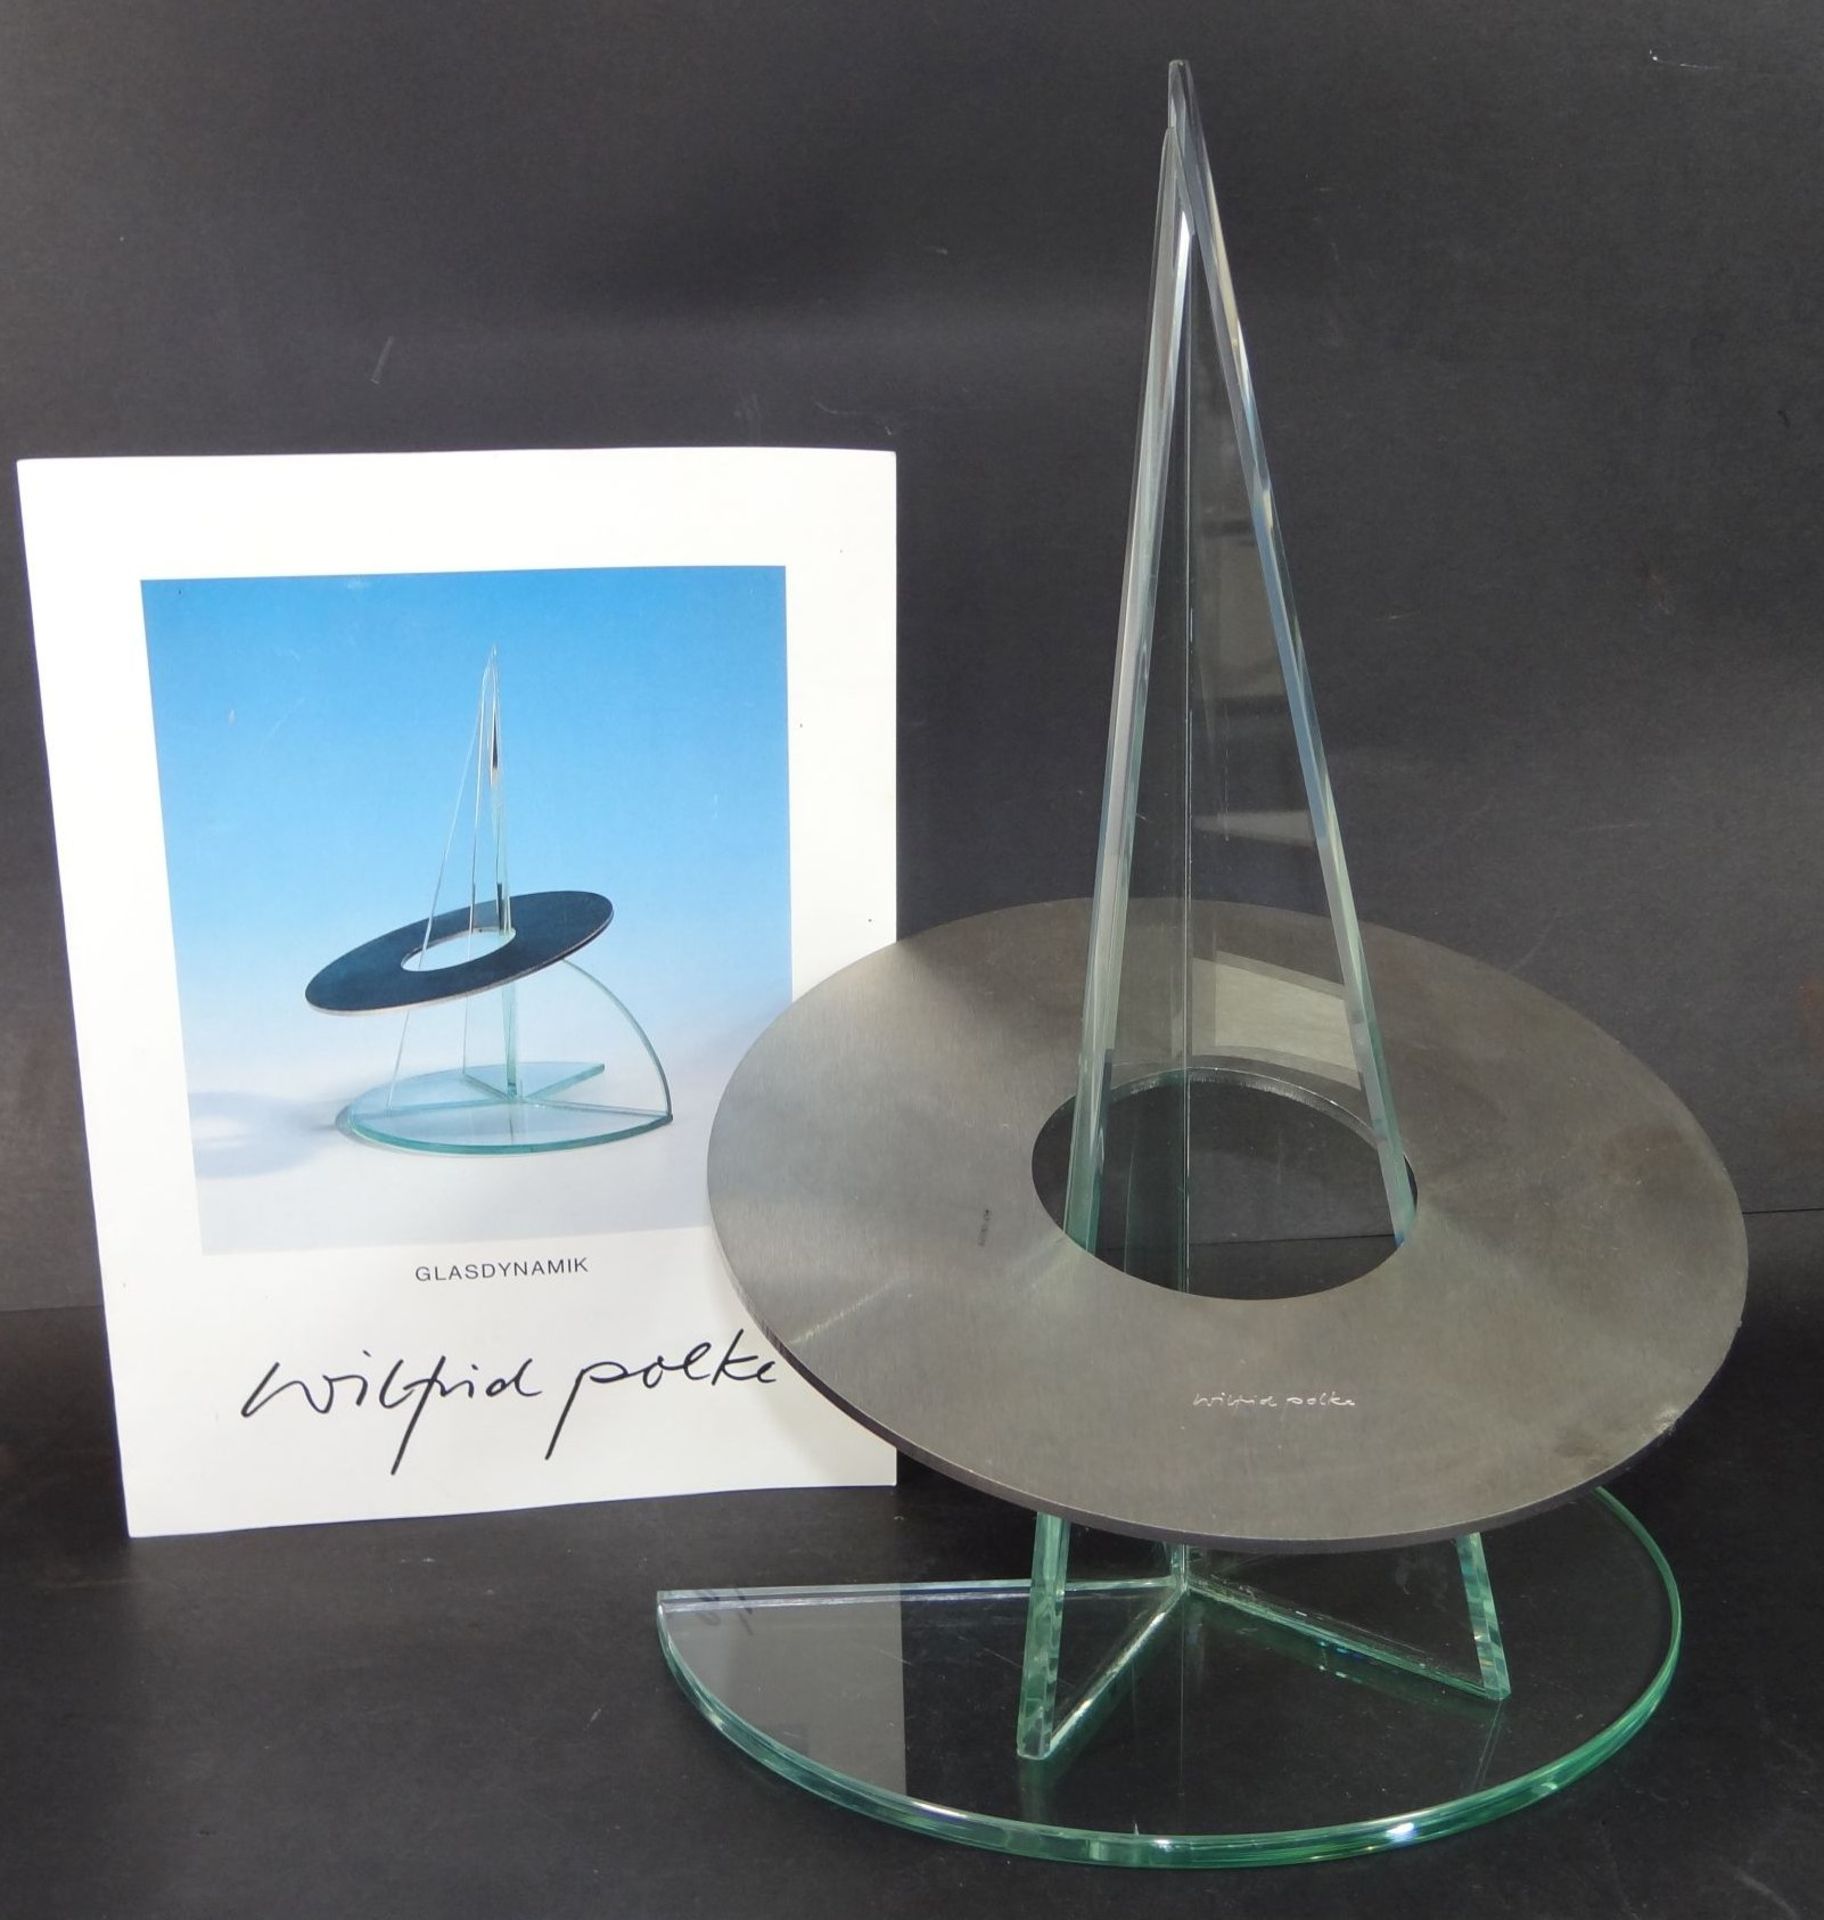 Wilfried Polke (1932-2014), "Glasdynamik", Objekt d'art, auf Metall signiert, anbei Vita, H-27,5 cm,